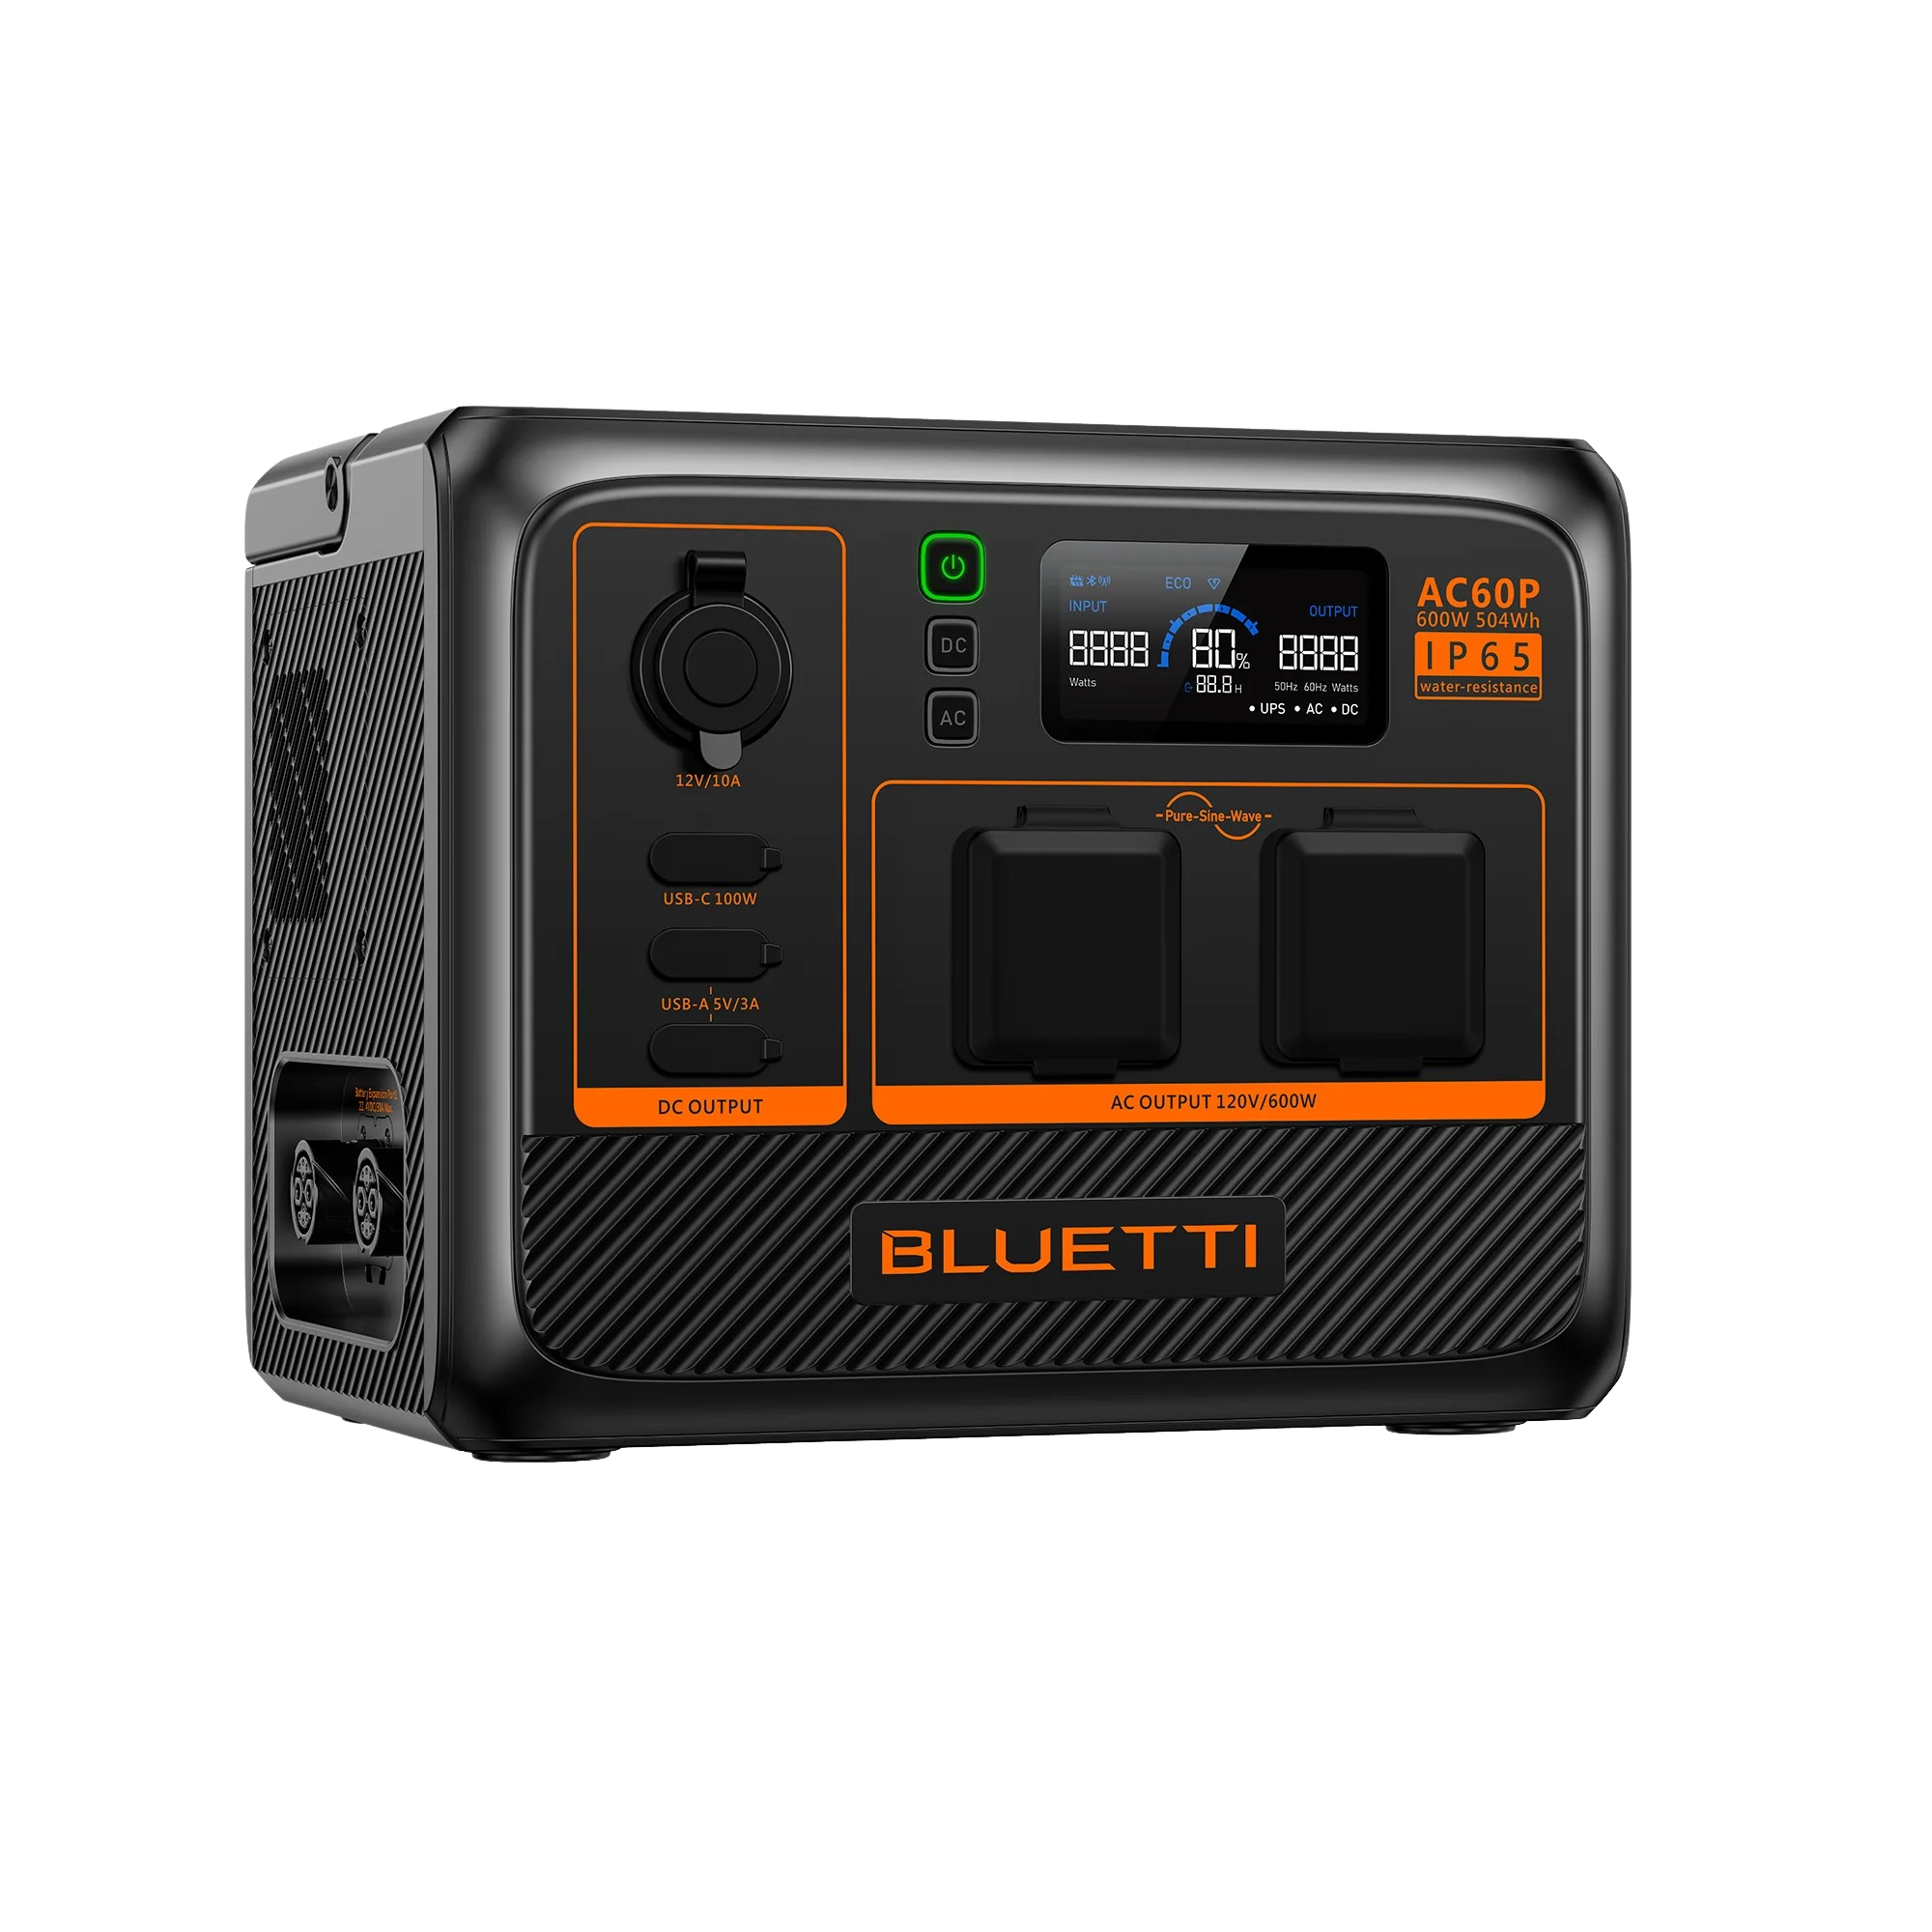 Bluetti AC60P 504Wh/600W Expandable Portable Power Station Solar Generator New